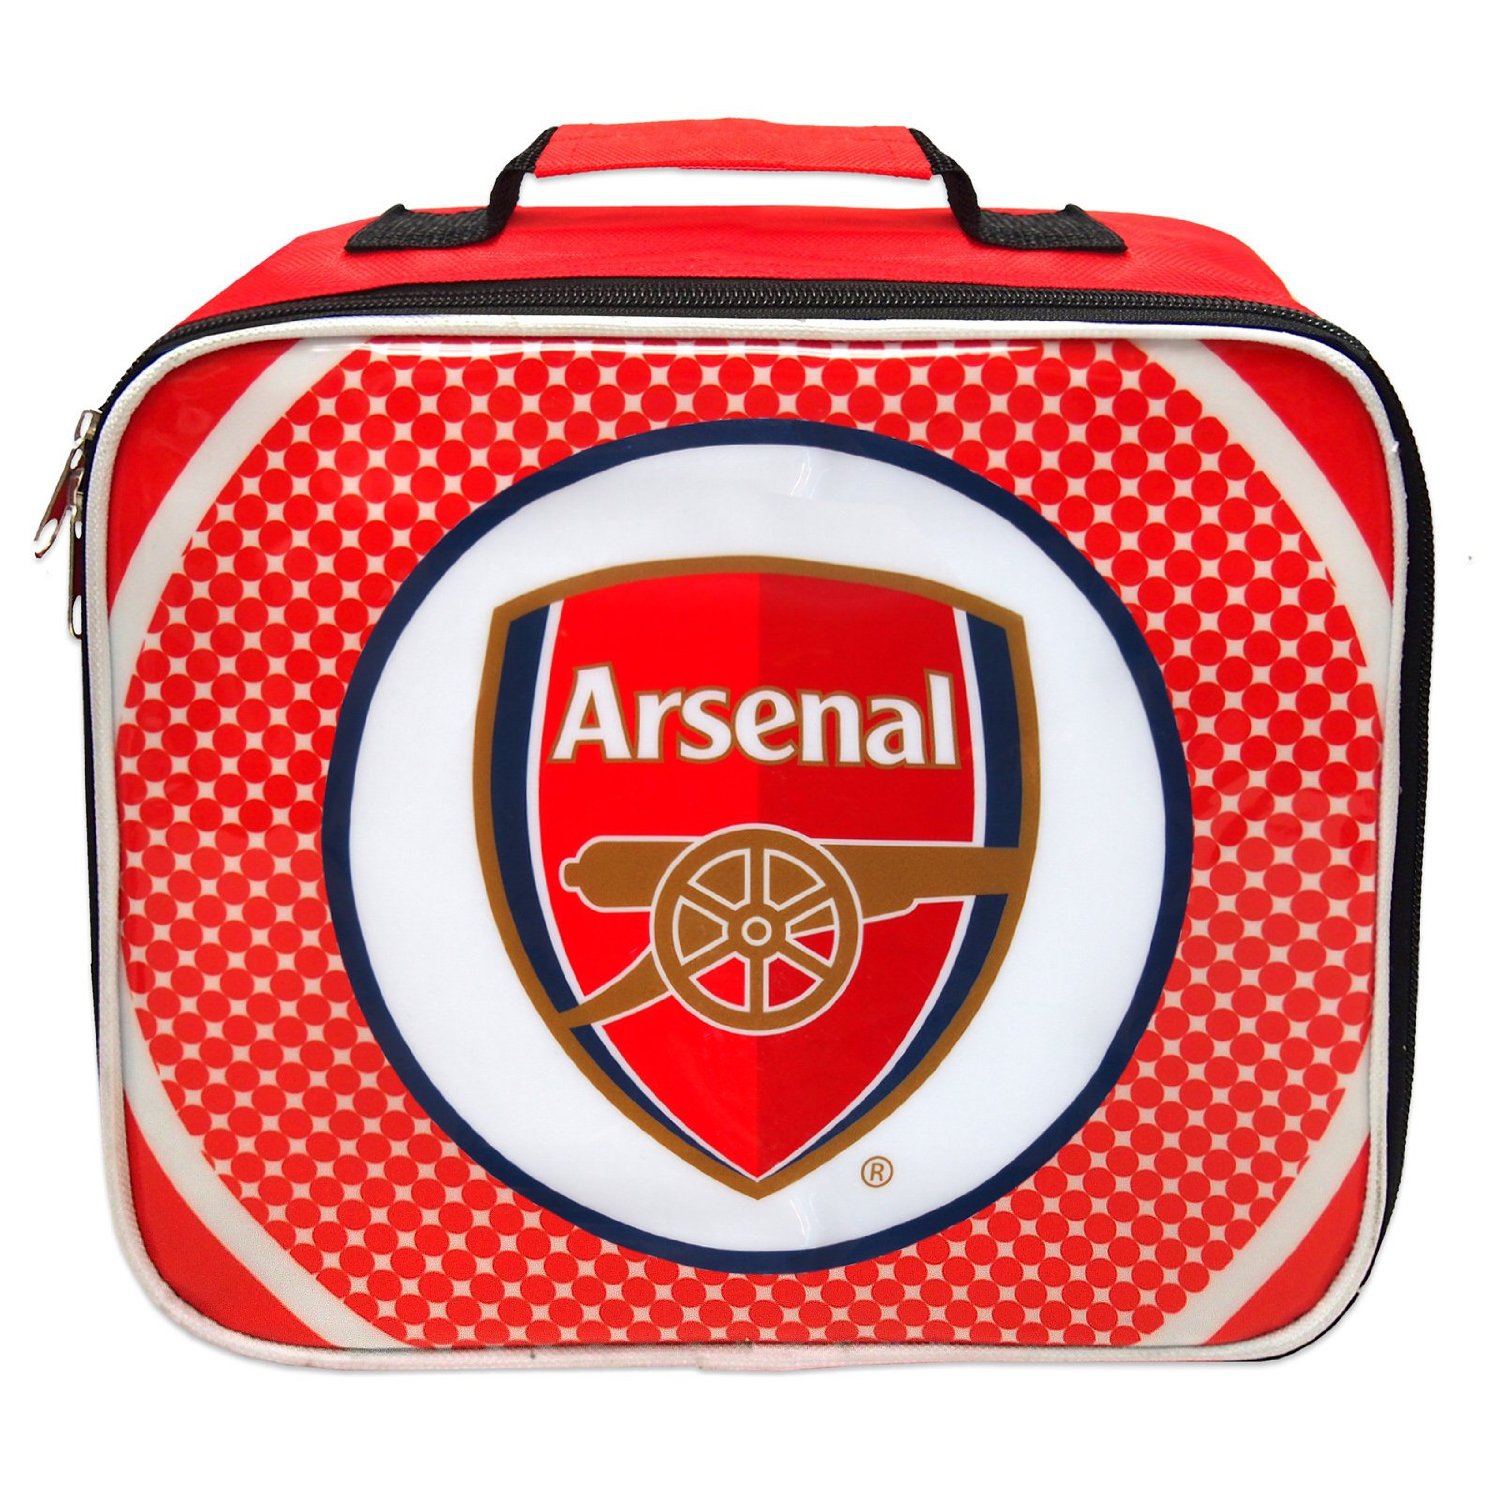 Arsenal Fc 'Bullseye' Football Premium Lunch Bag Official